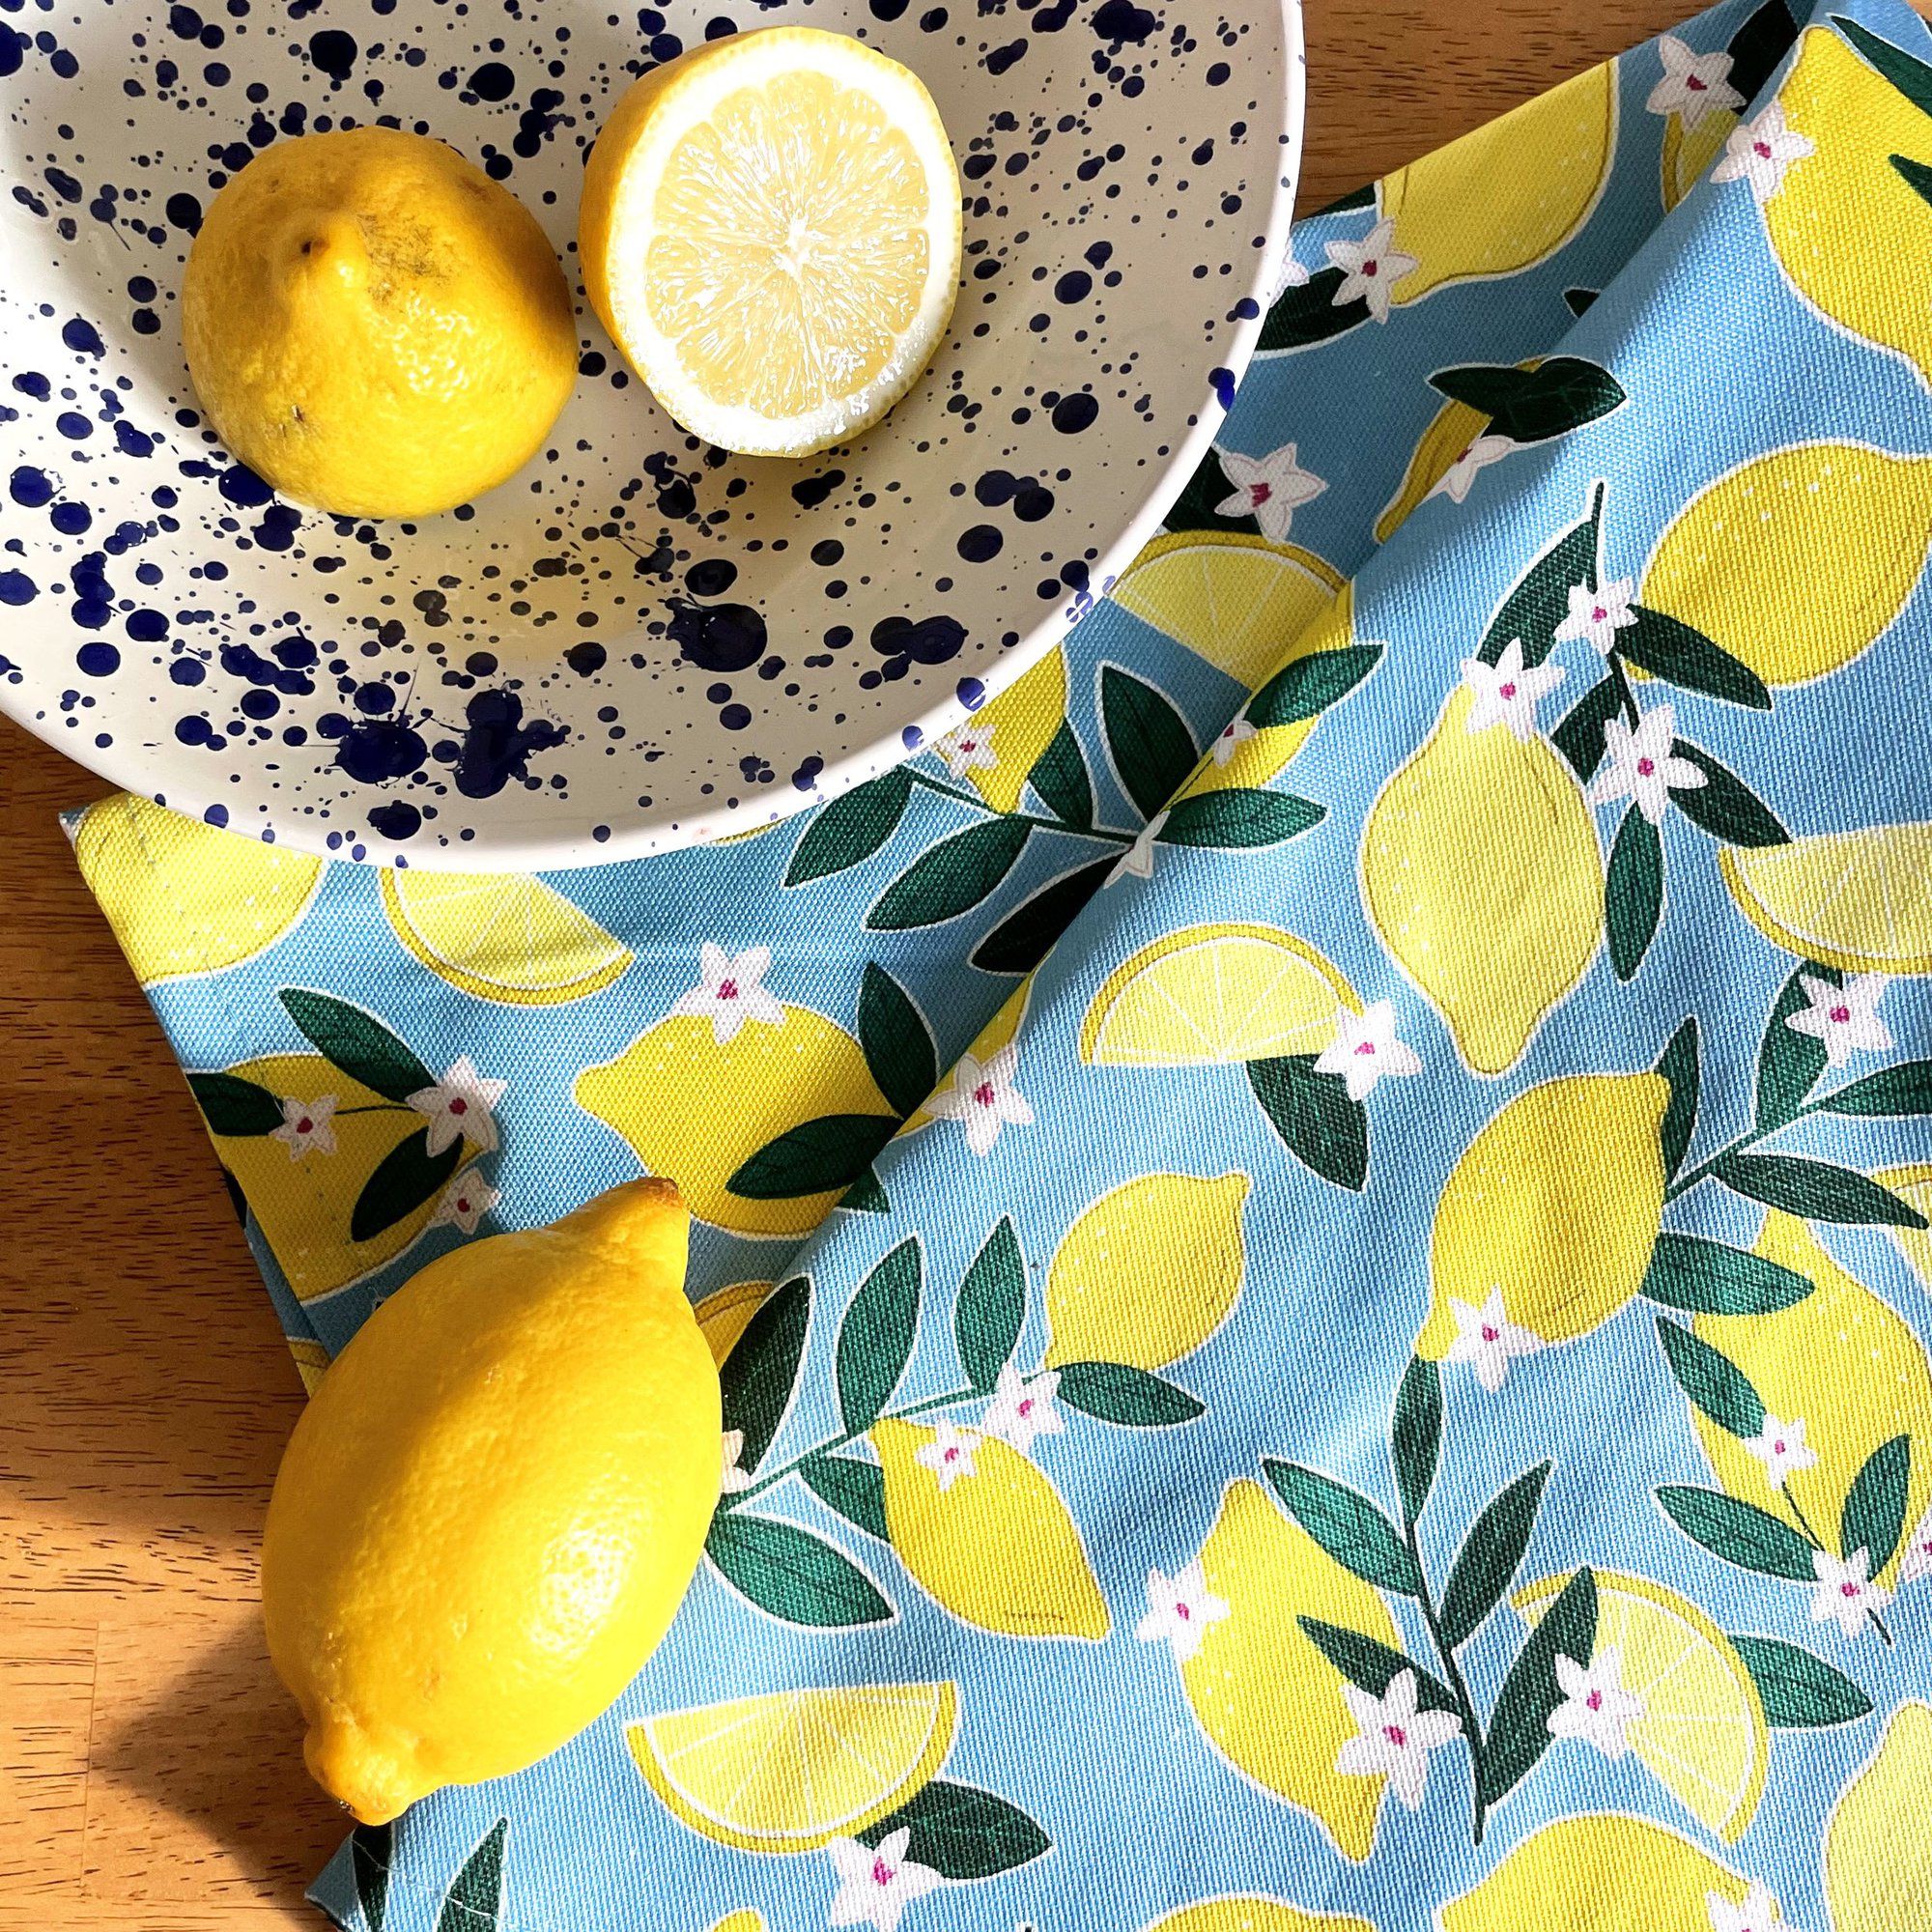 Sorrento Lemons Organic Cotton Tea Towel - Just lemons